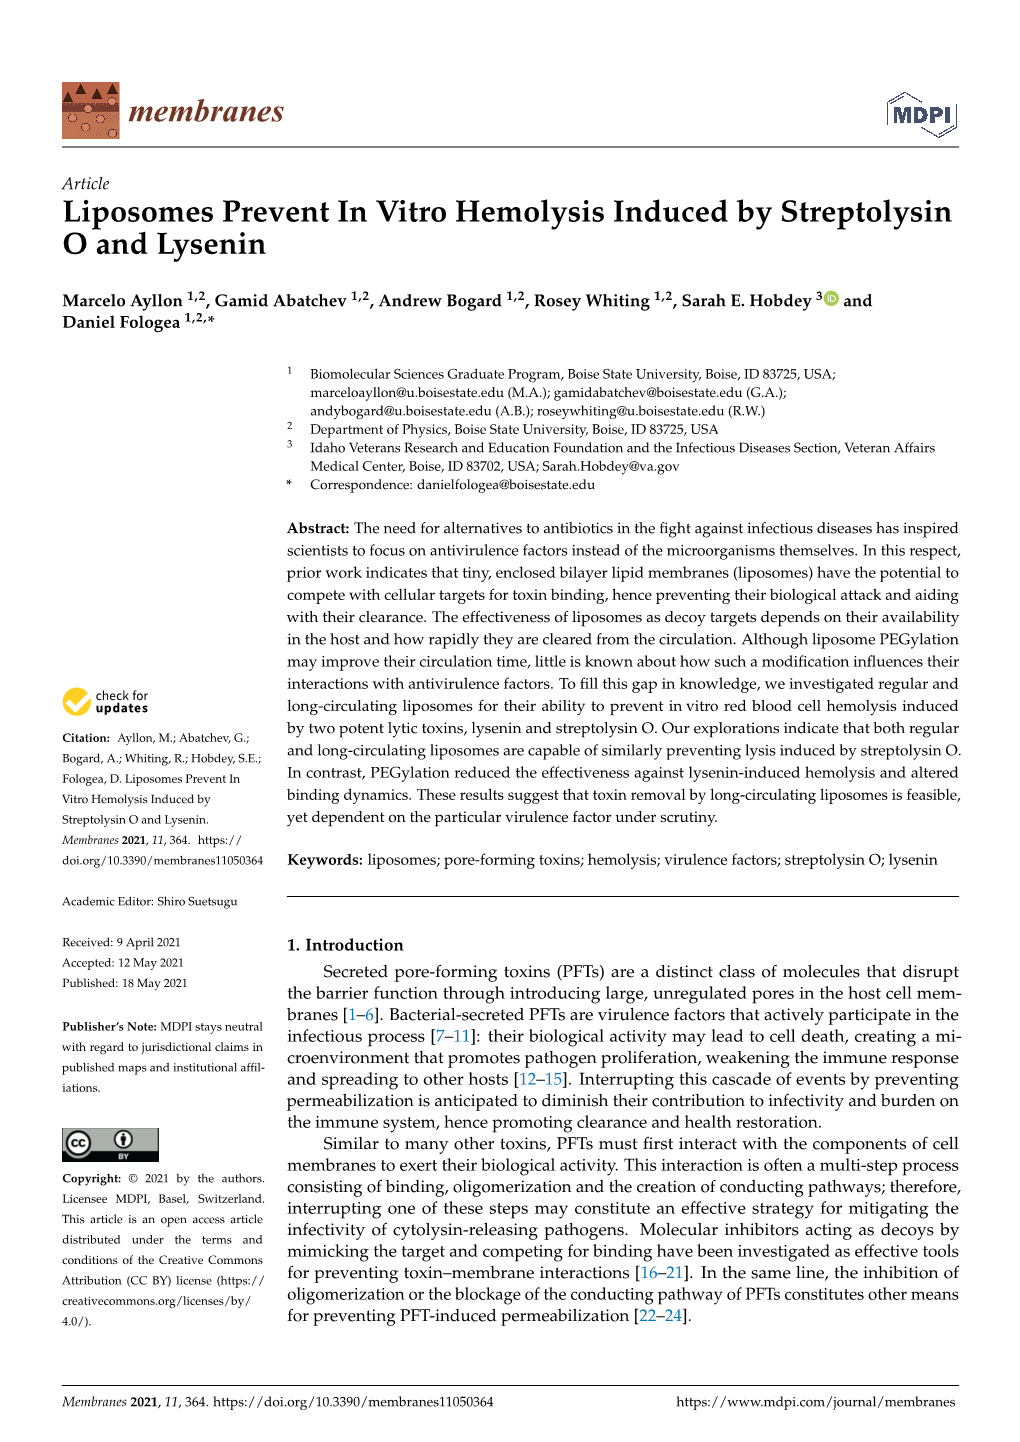 Liposomes Prevent in Vitro Hemolysis Induced by Streptolysin O and Lysenin